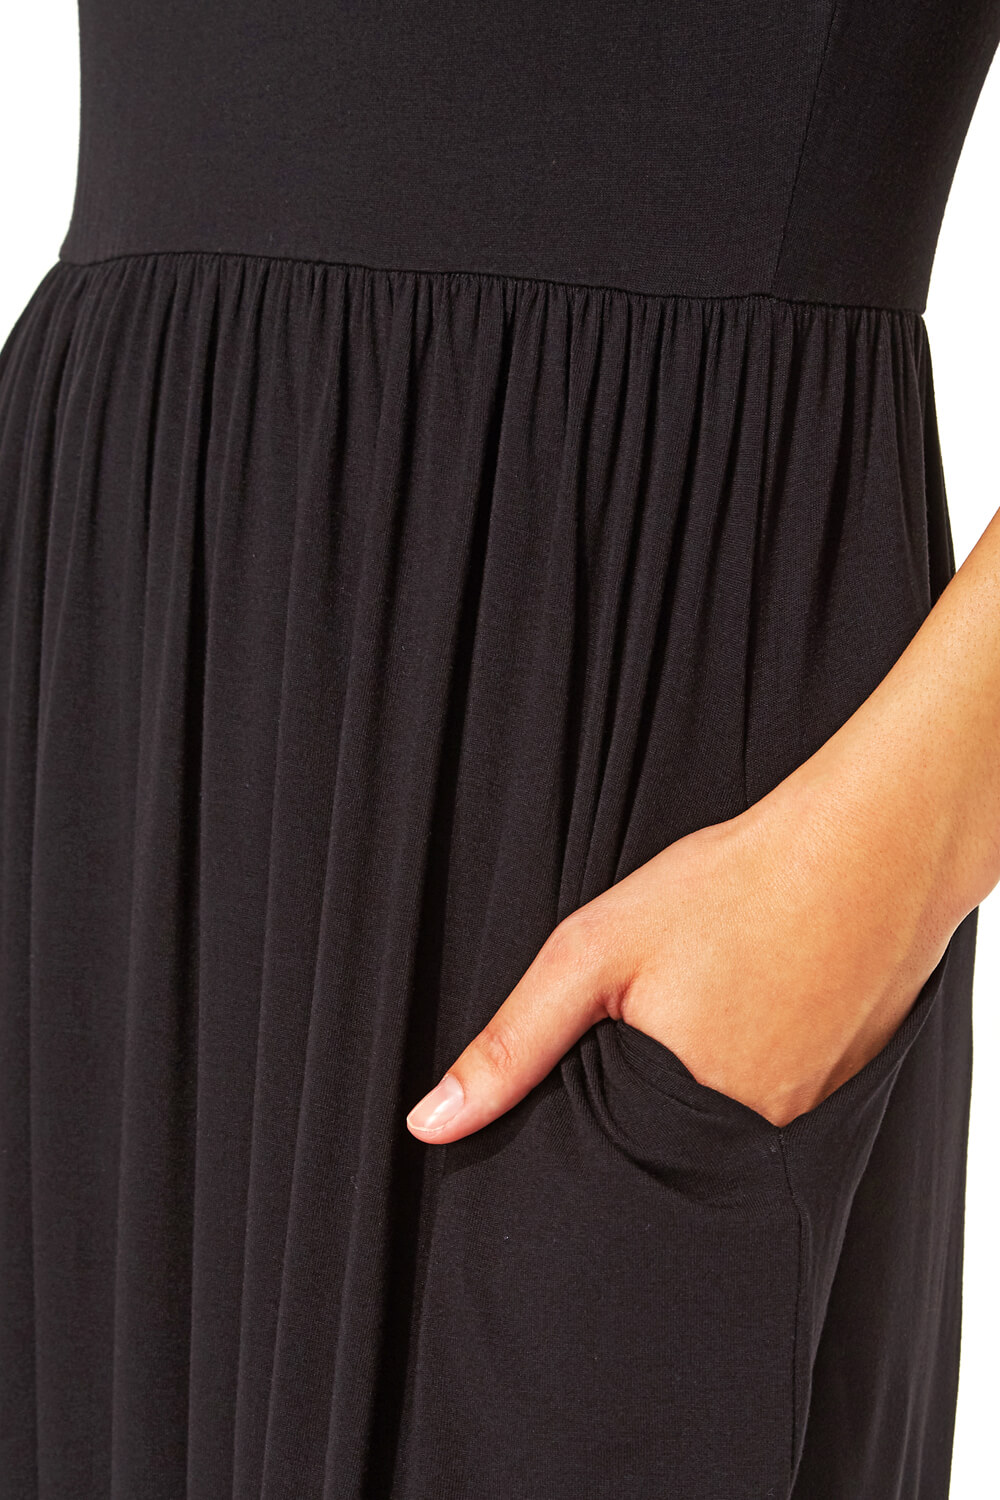 Black Gathered Skirt Maxi Dress, Image 3 of 4